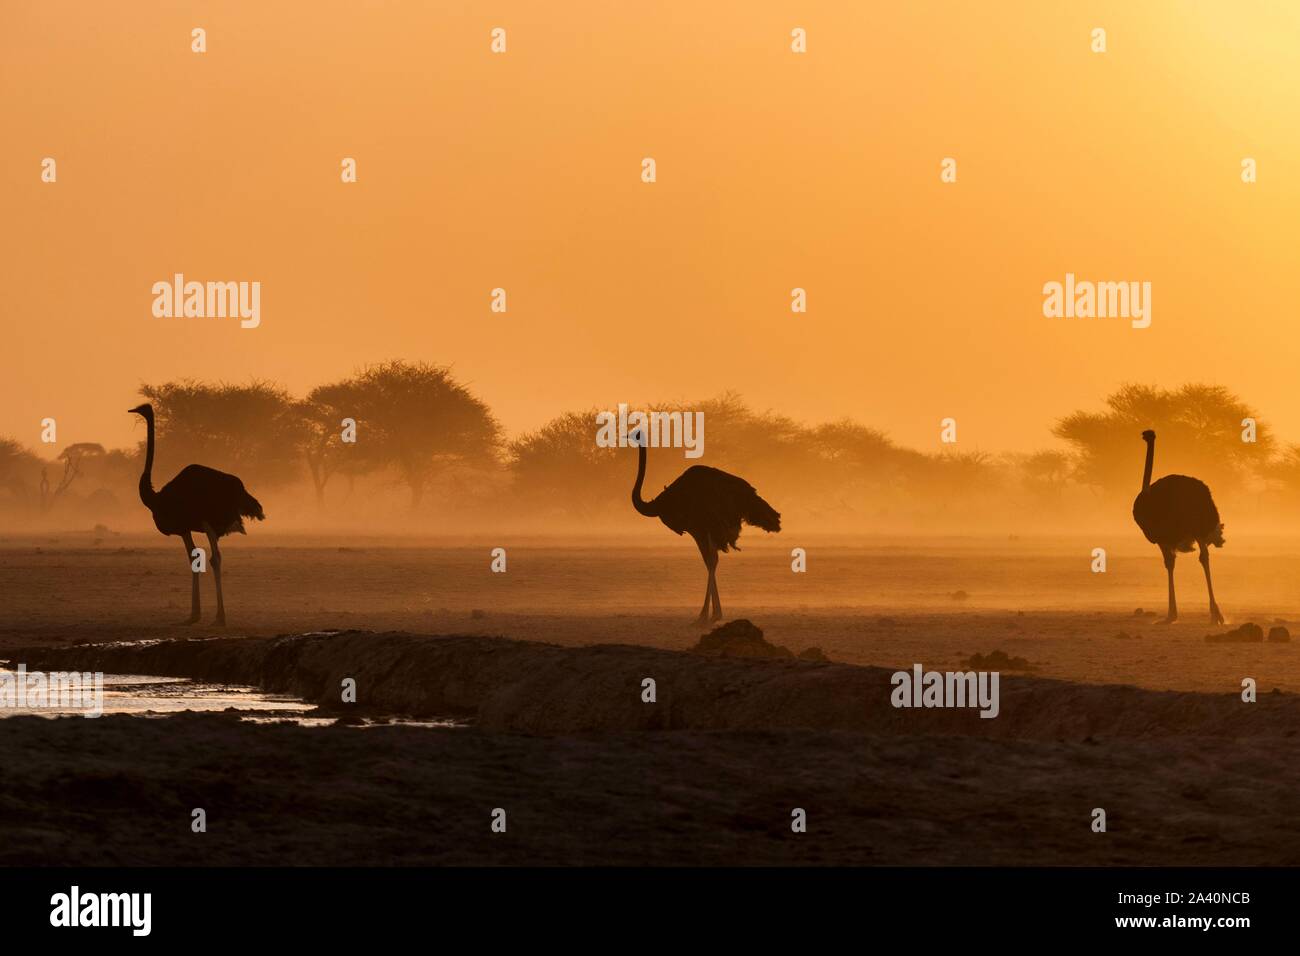 Common ostriches (Struthio camelus), three animals at sunset at a waterhole, Nxai Pan National Park, Ngamiland, Botswana Stock Photo